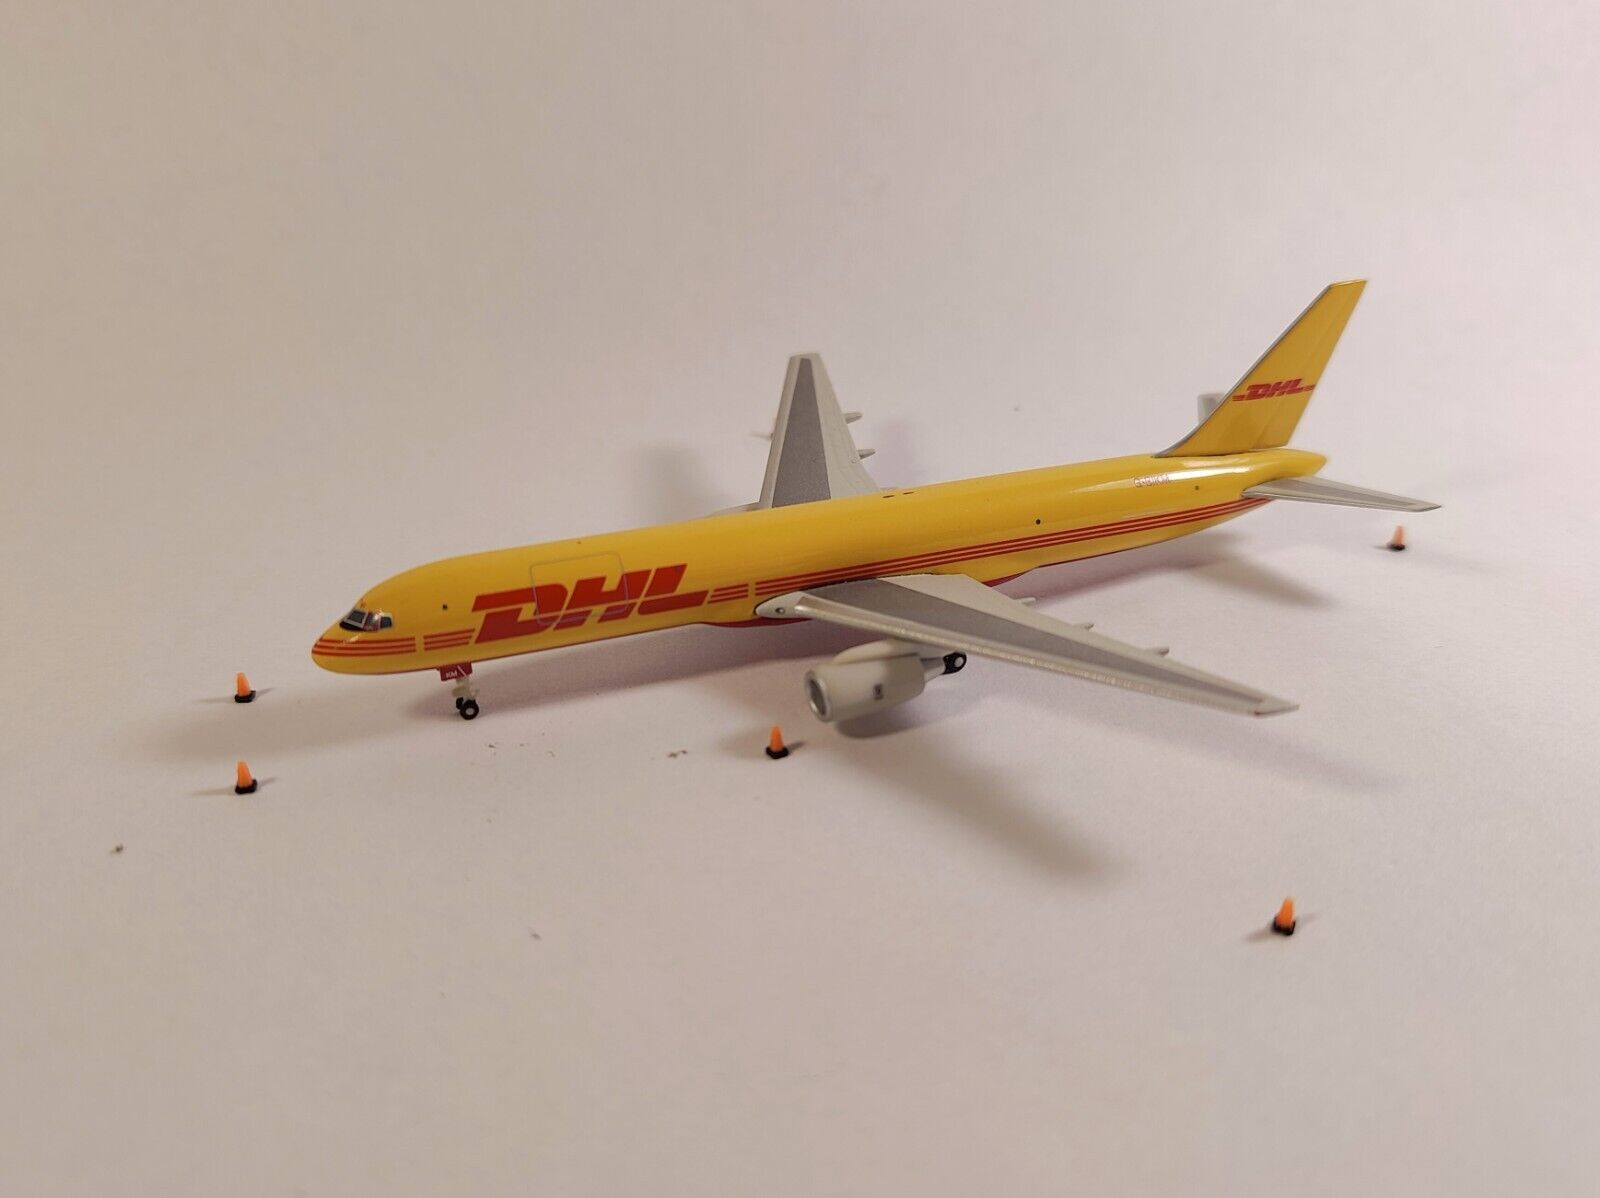 40x Orange AIRPORT TRAFFIC CONES Aircraft GSE Vehicle Model 1:400 Scale Diorama